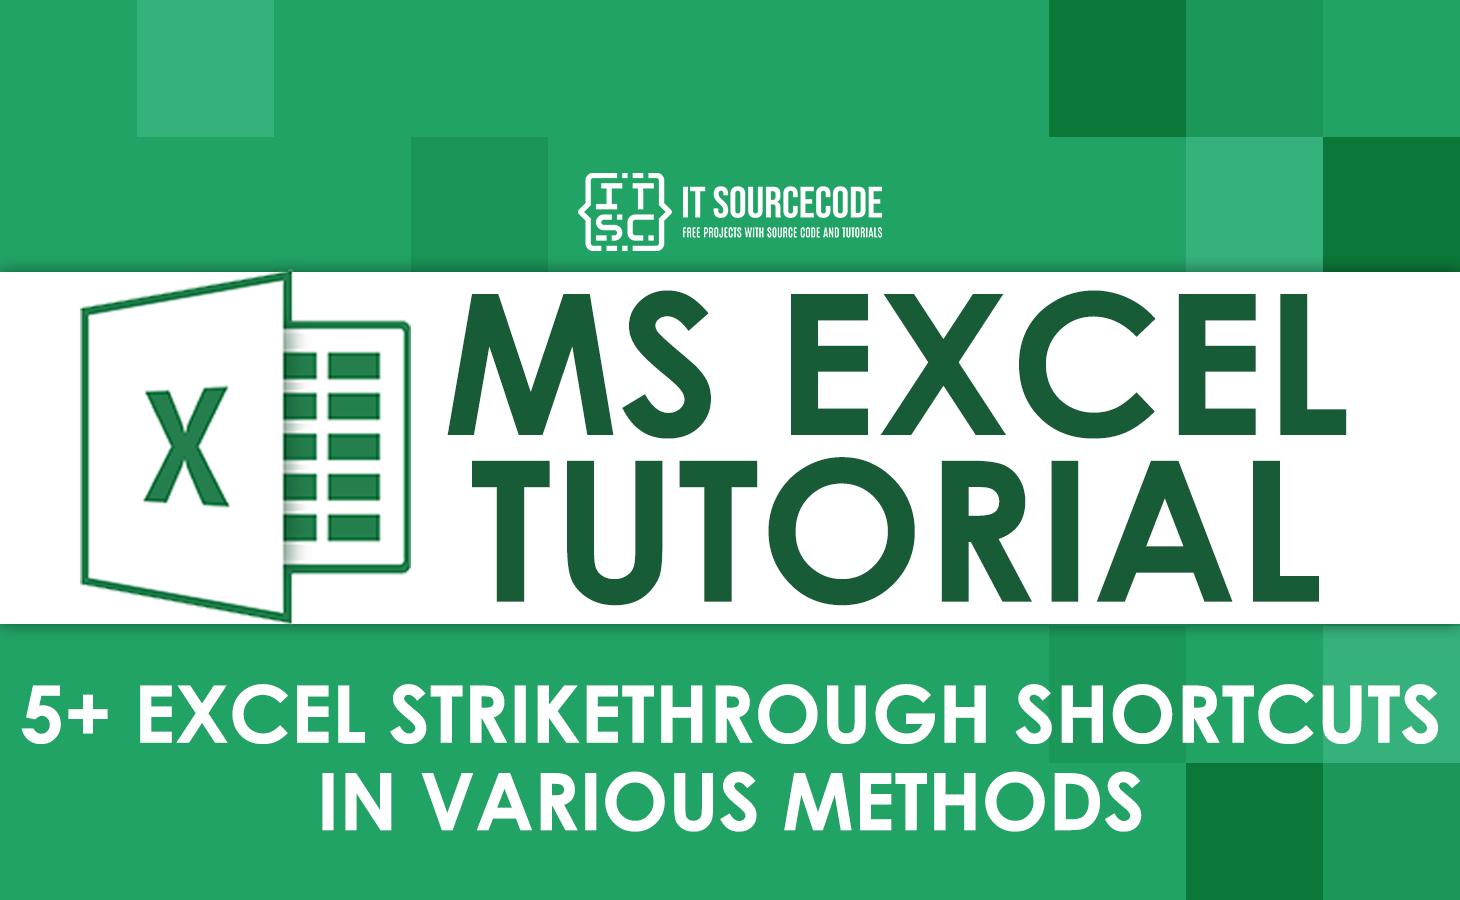 5+ Excel Strikethrough Shortcuts in Various Methods